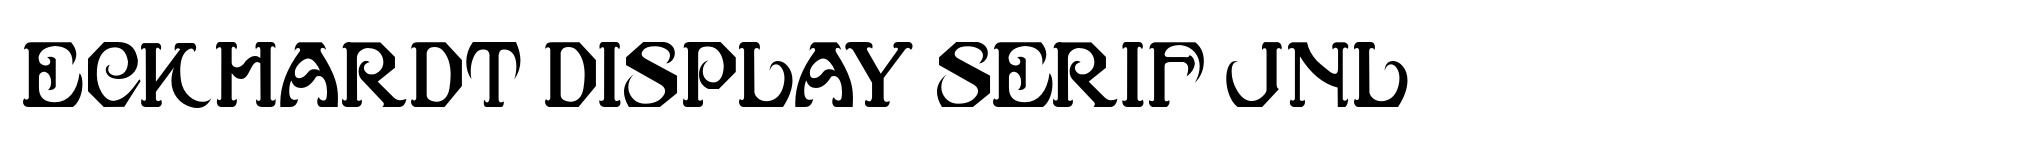 Eckhardt Display Serif JNL image